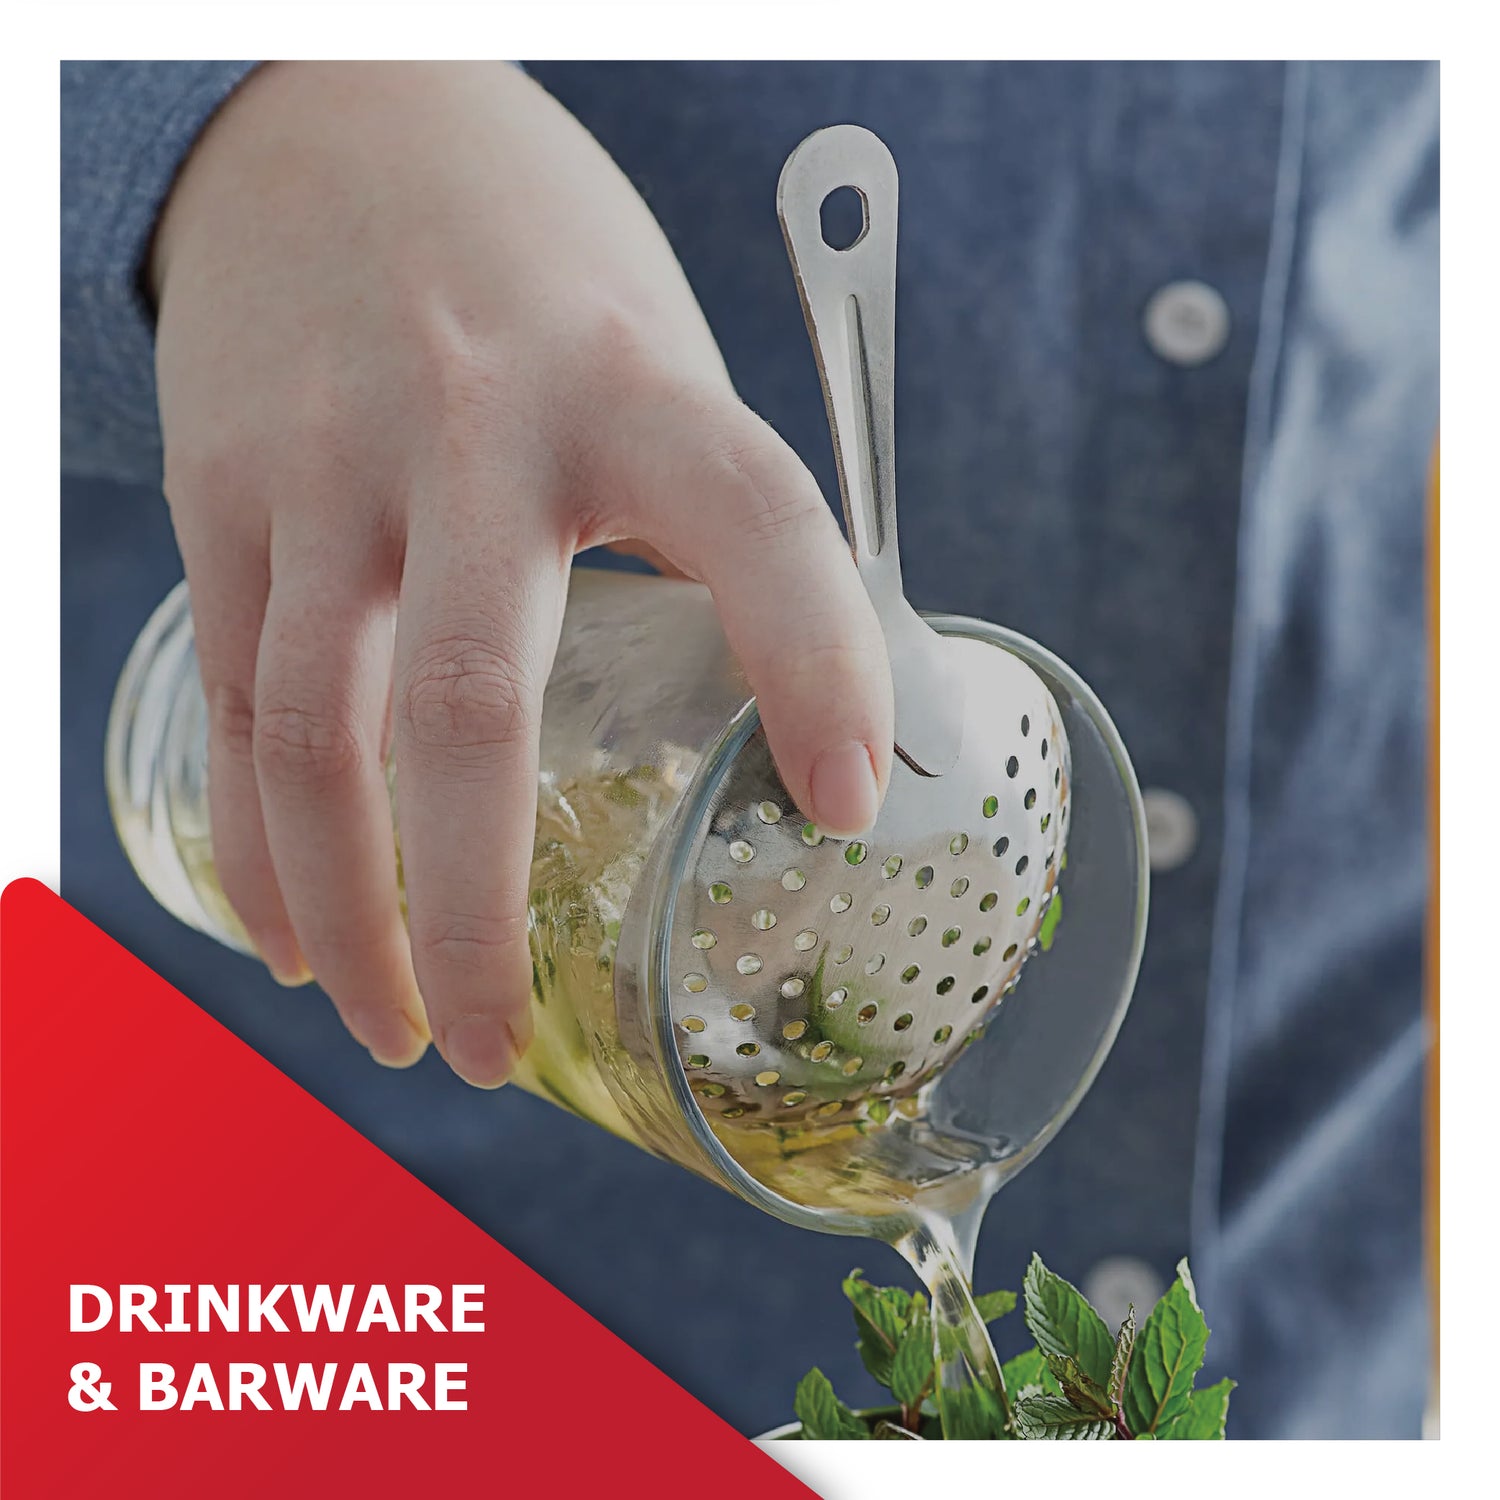 Drinkware & Barware | Category